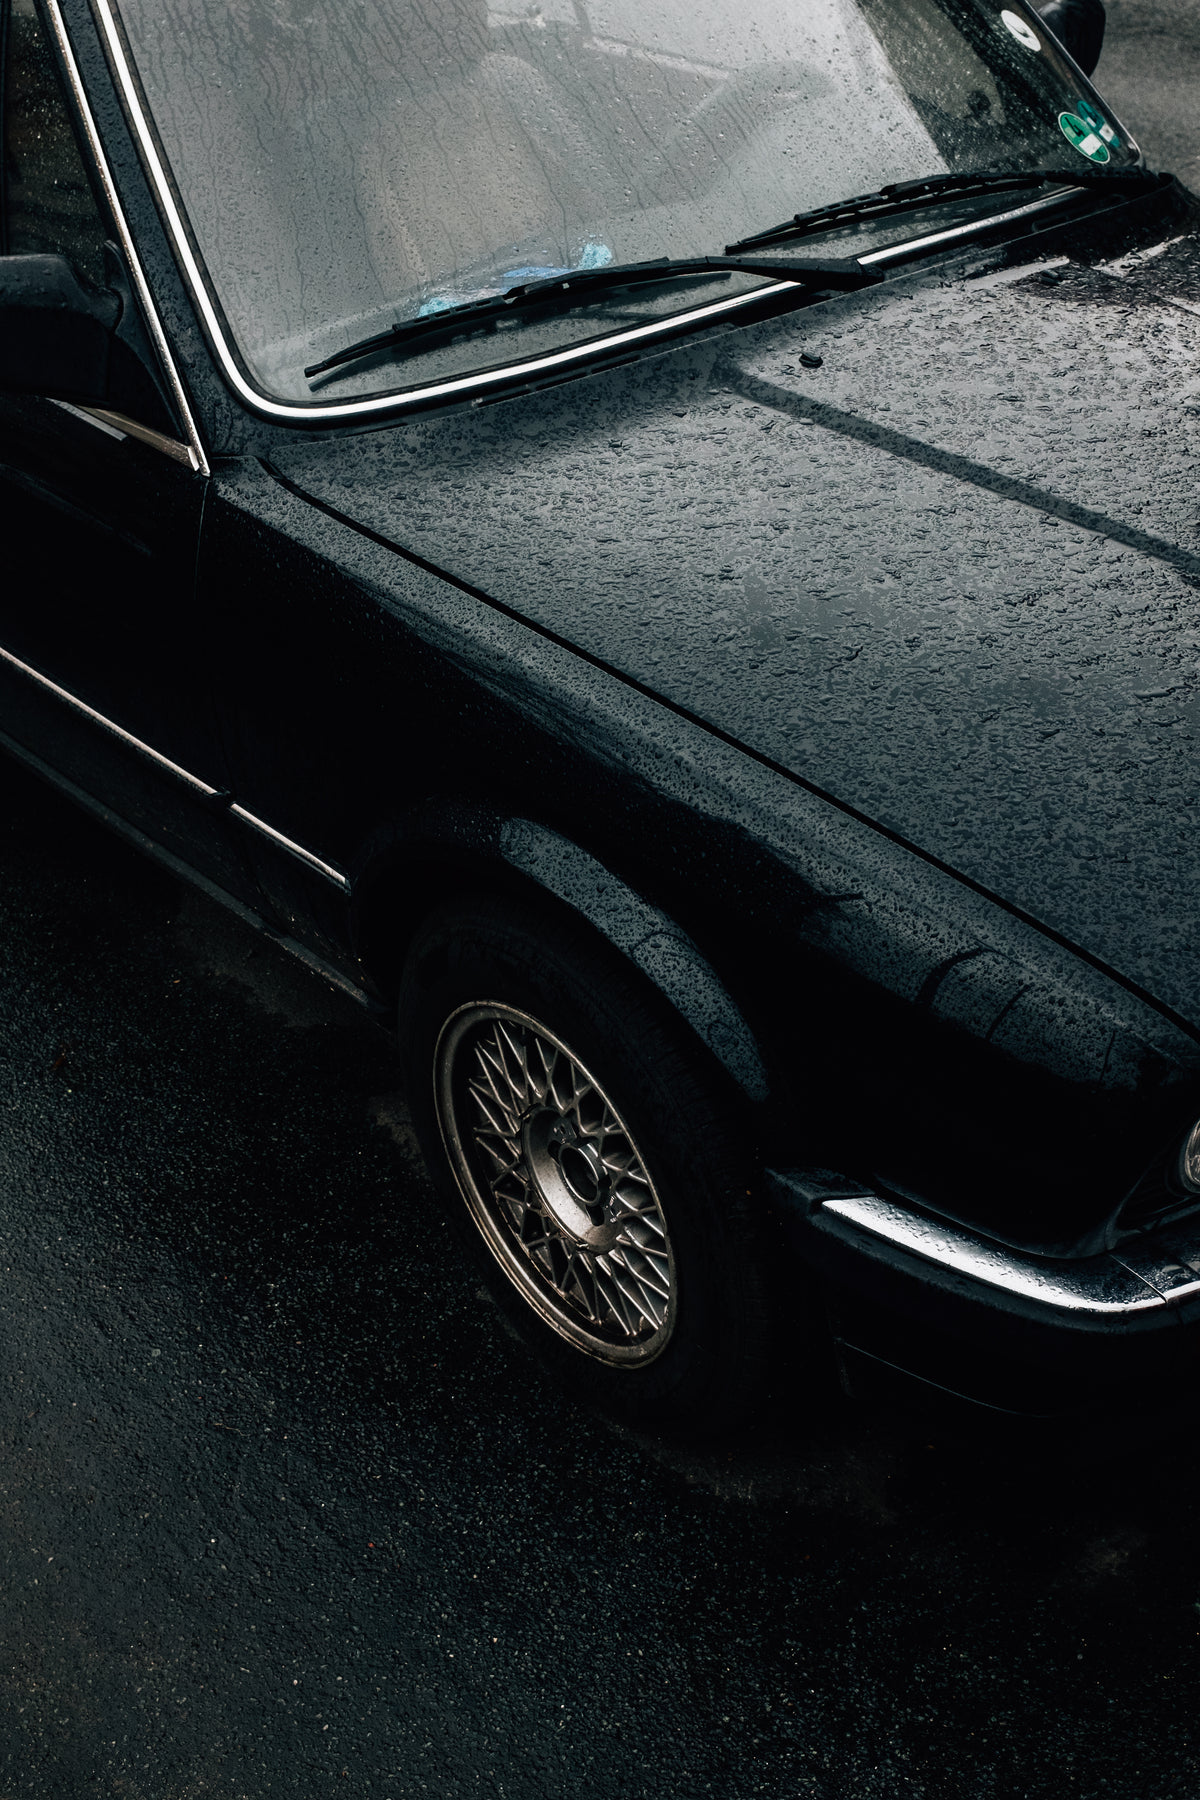 rain-covered vintage car